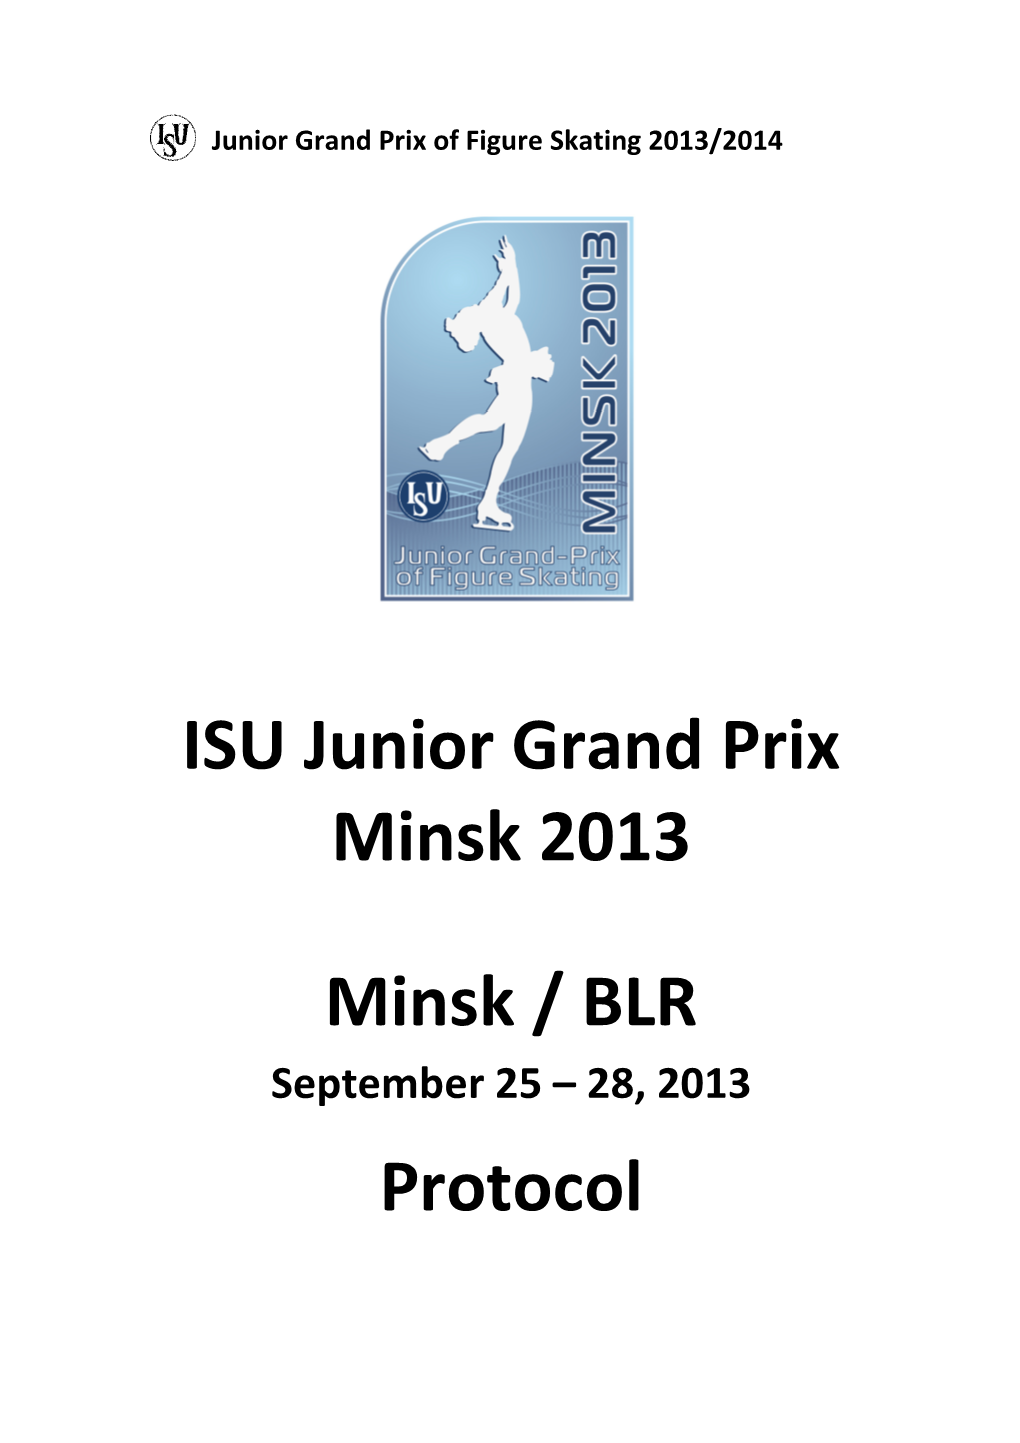 ISU Junior Grand Prix 2013 Belarus, Minsk